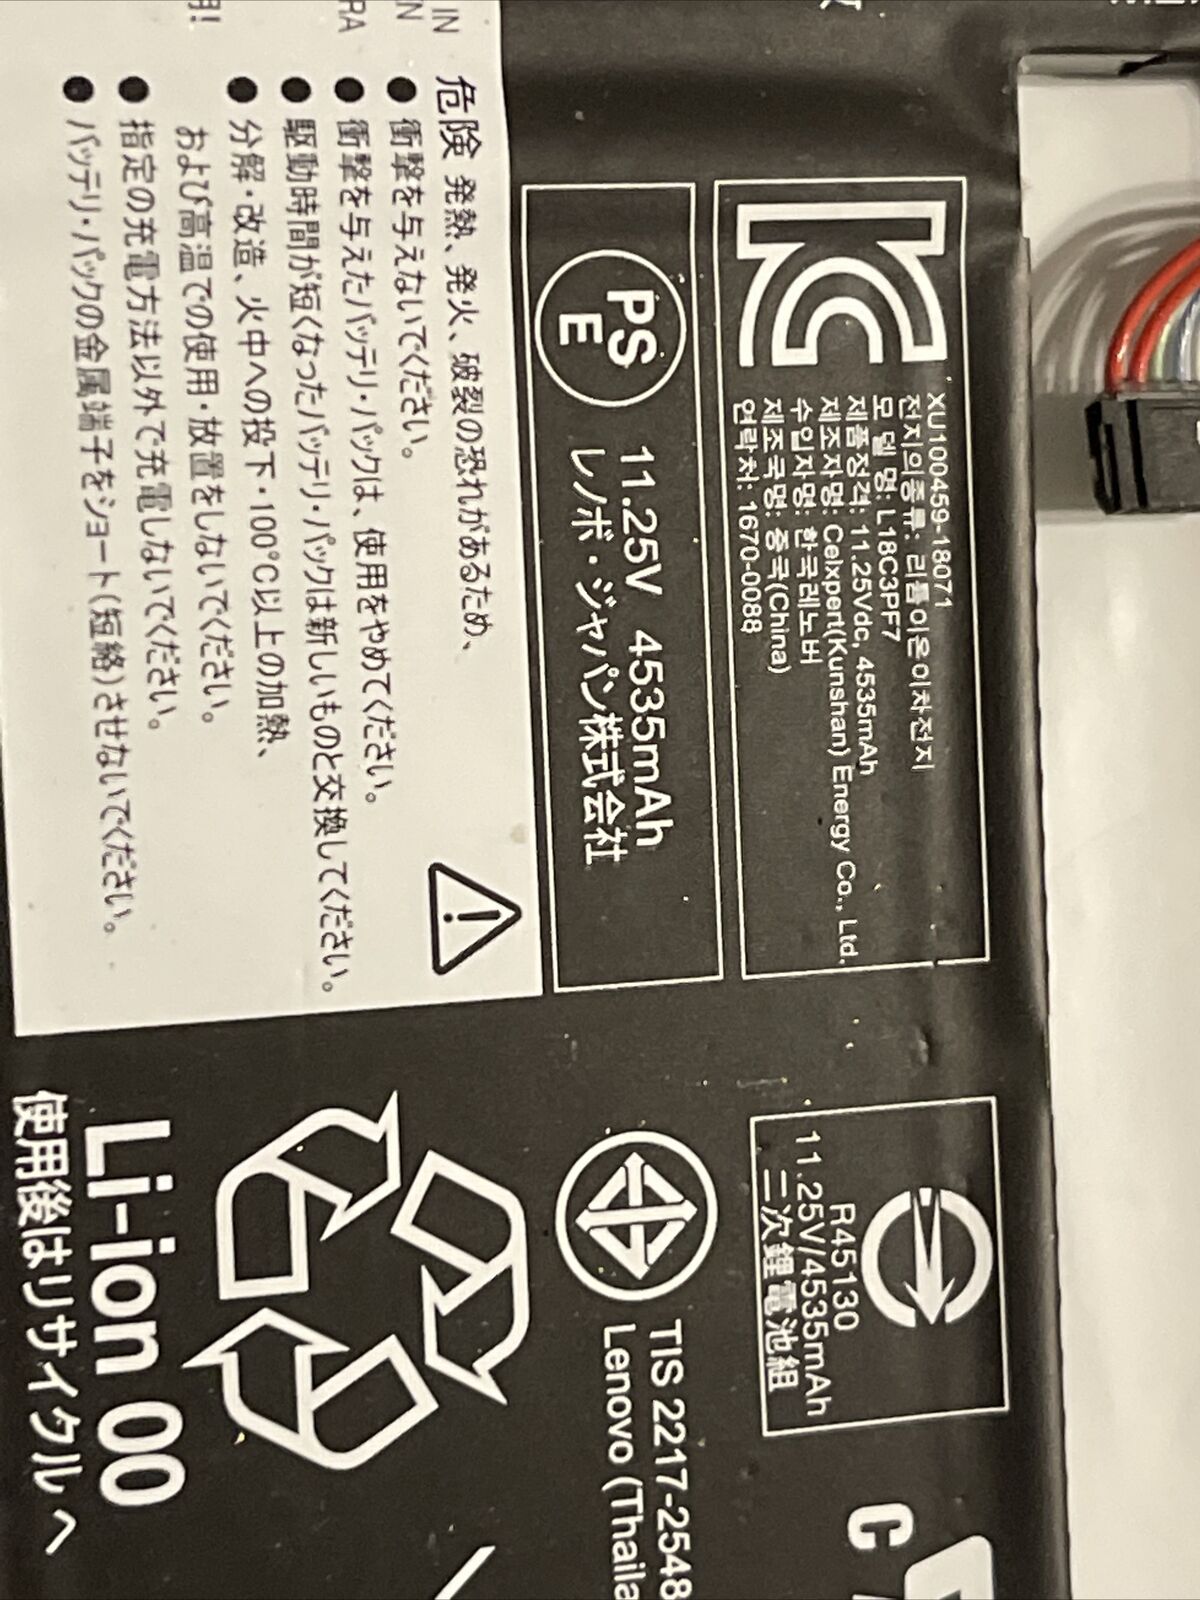 Genuine Lenovo ideapad battery 11.25V 4535mAh L18C3PF7 5B10T09095 ata X7